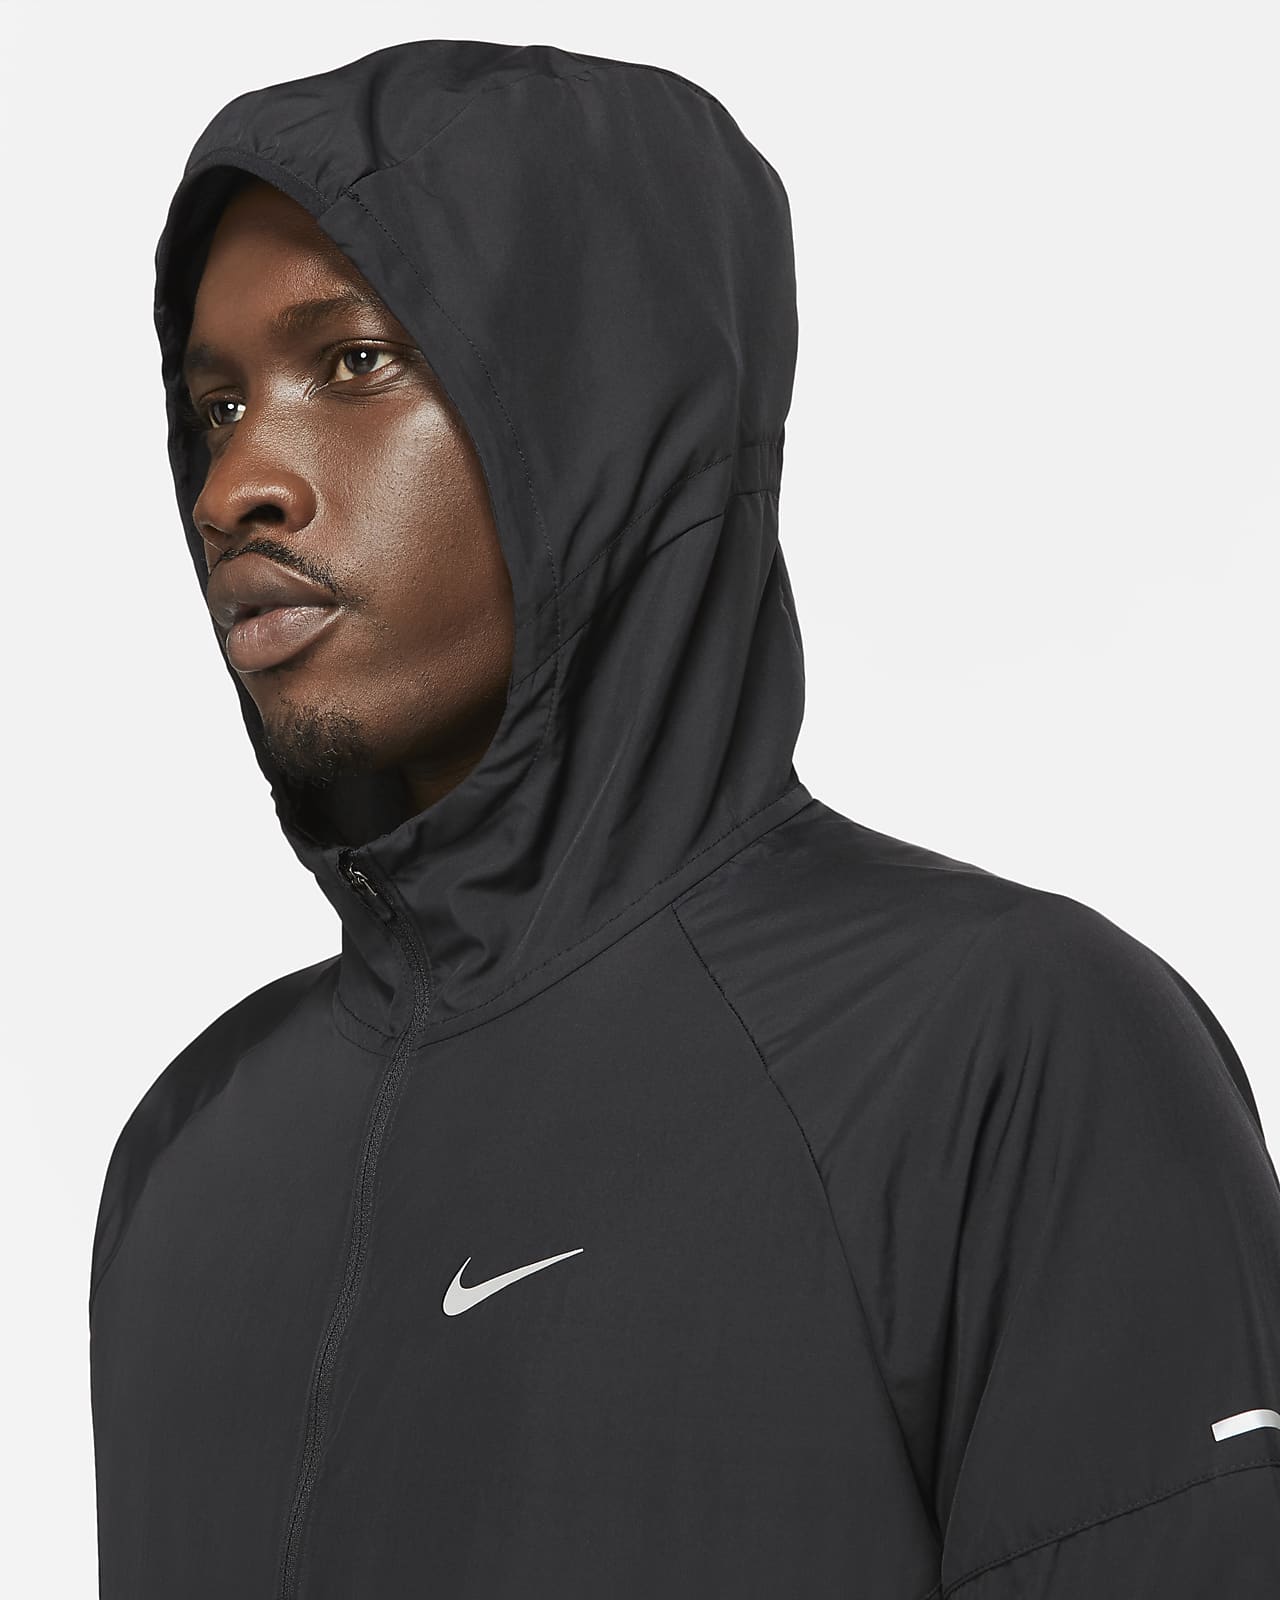 Nike Repel Miler Men's Running Jacket 